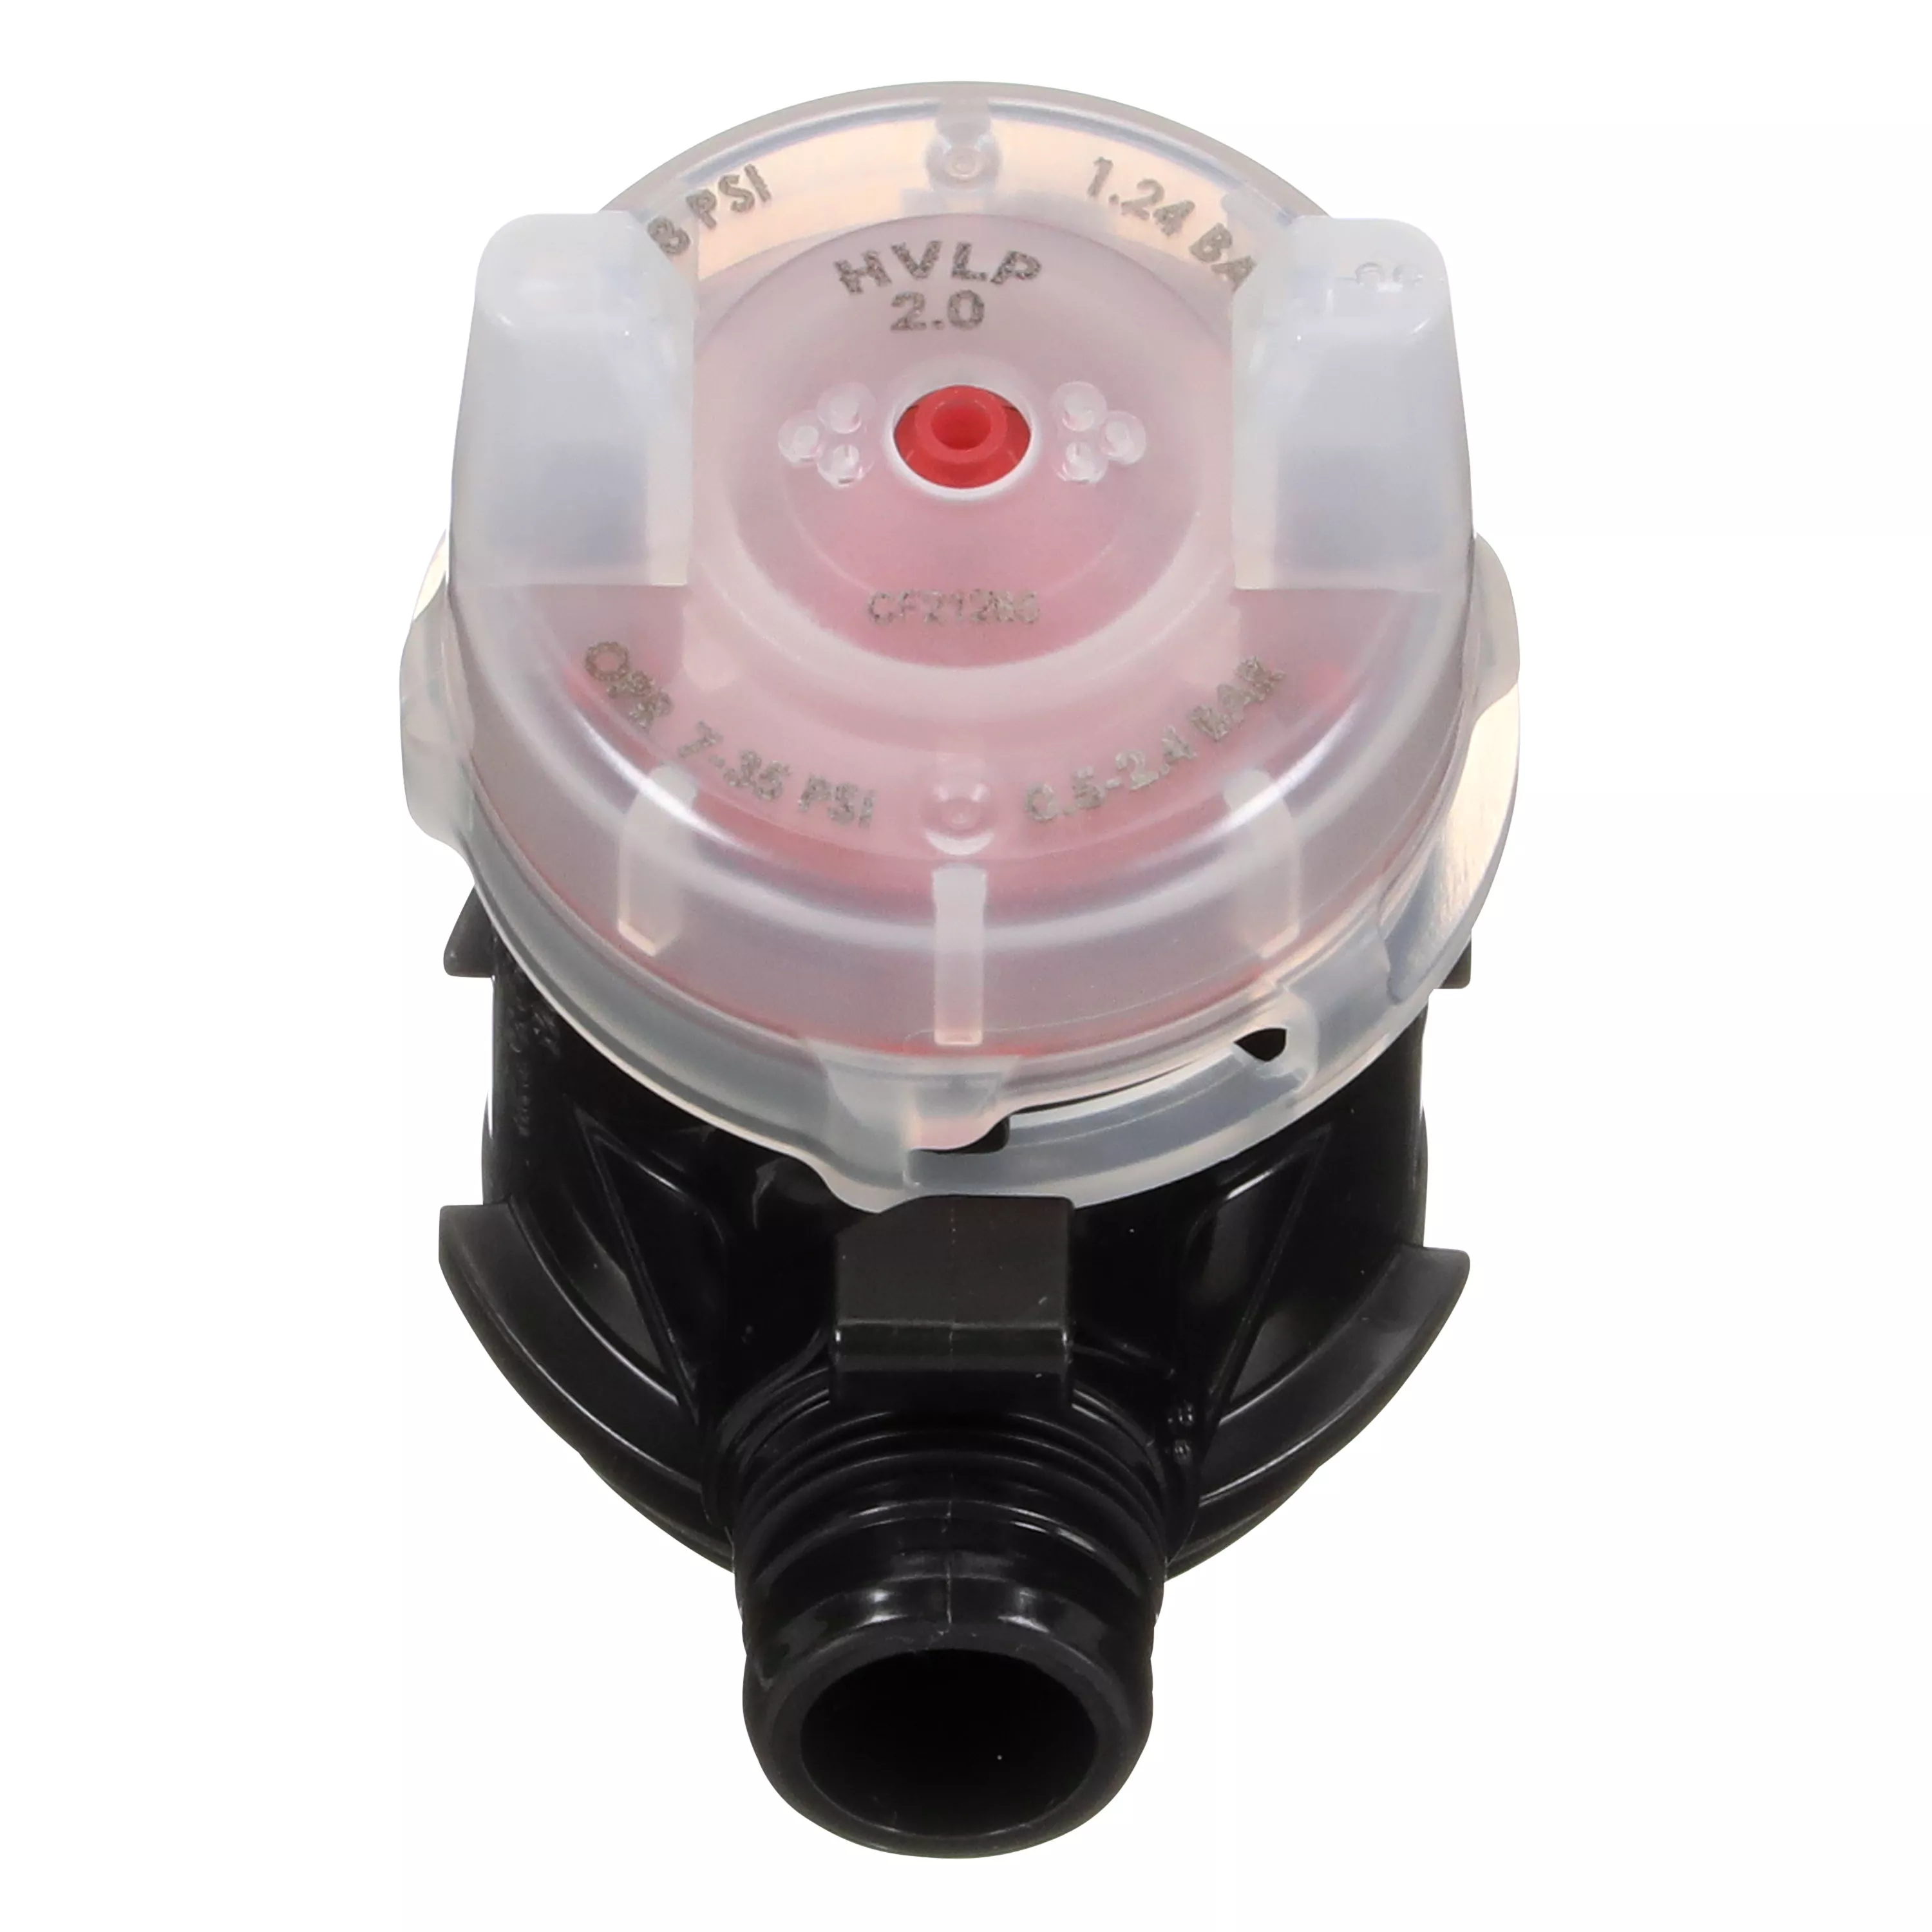 SKU 7100271256 | 3M™ Performance Pressure HVLP Atomizing Head Refill Kit 26820